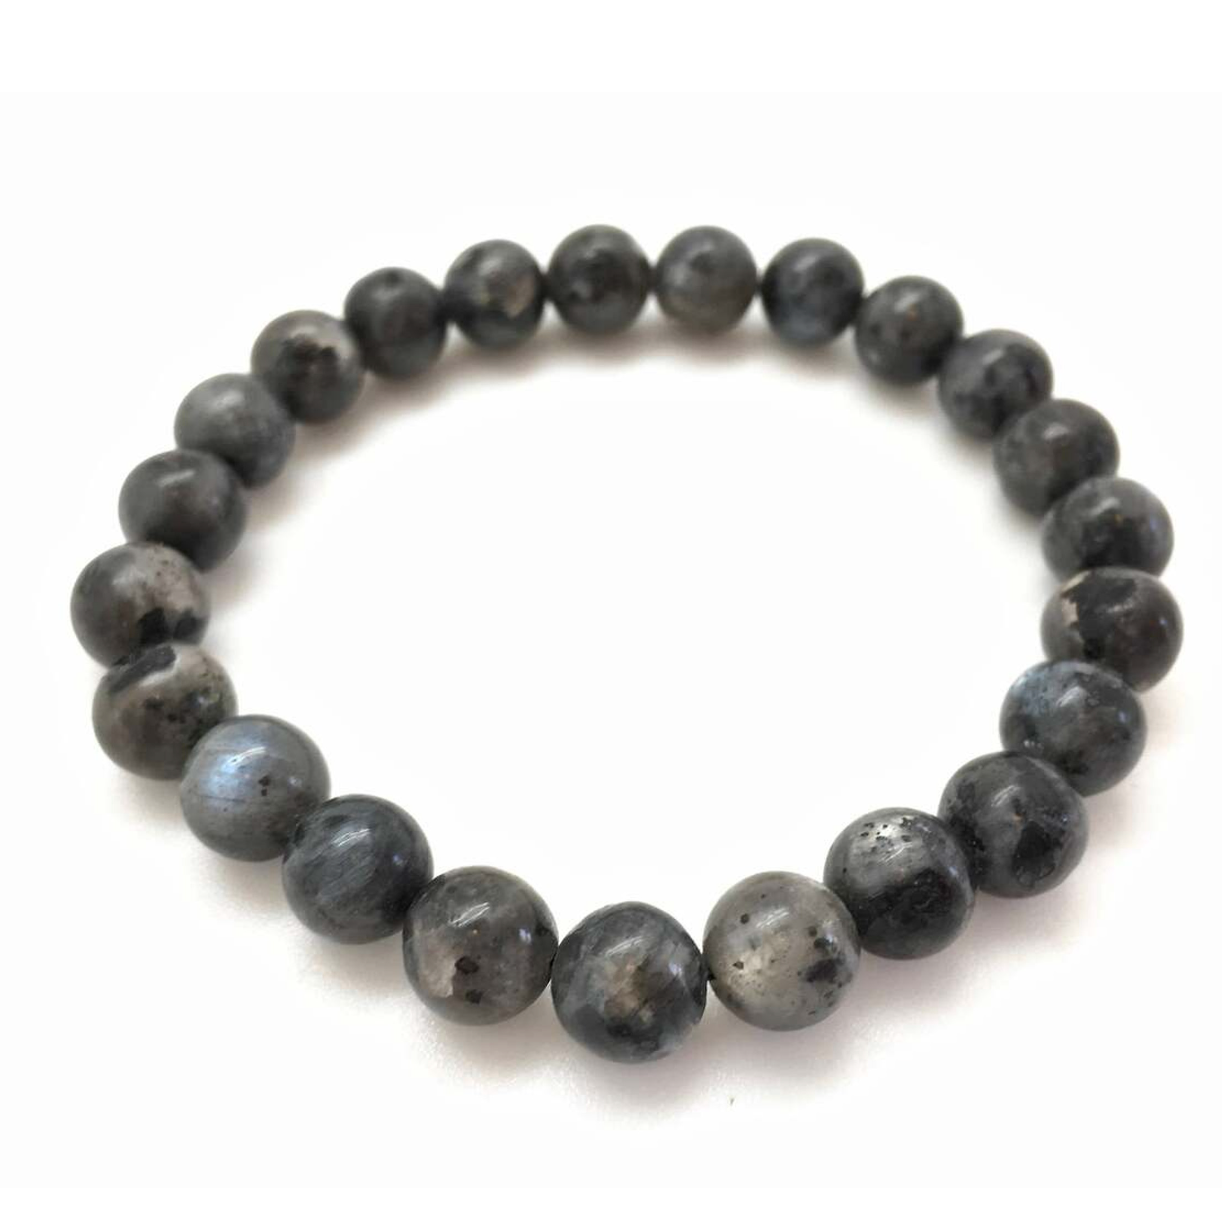 Unisex larvikite / lavakite / black labradorite crystal bead bracelet 6mm